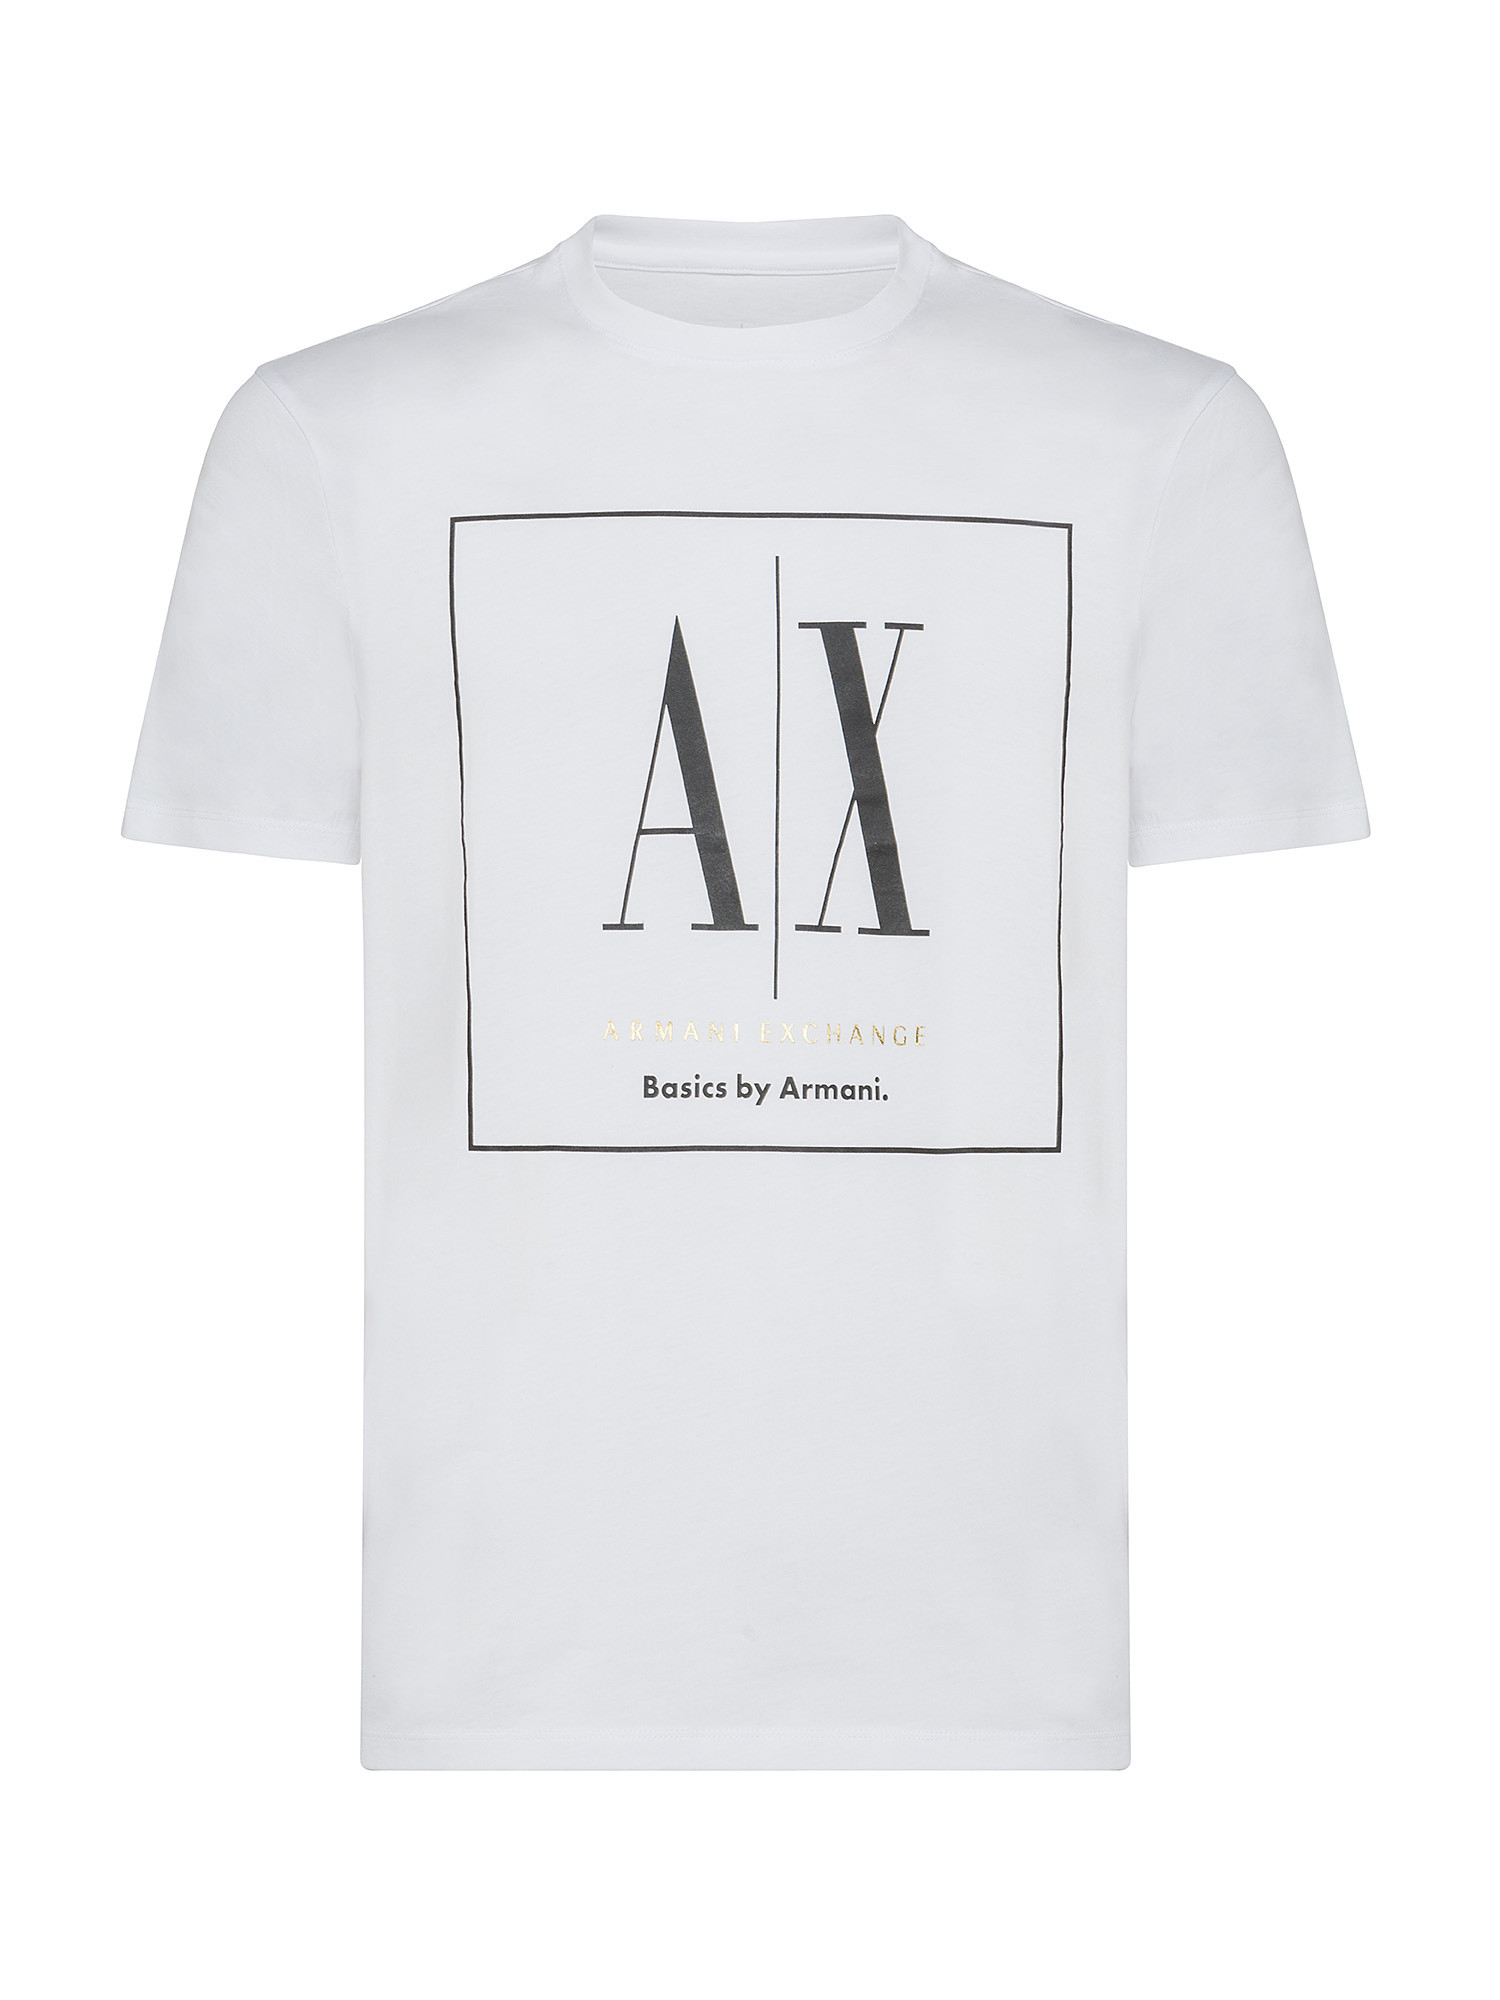 Armani Exchange - T-shirt regular fit in cotone con logo, Bianco, large image number 0